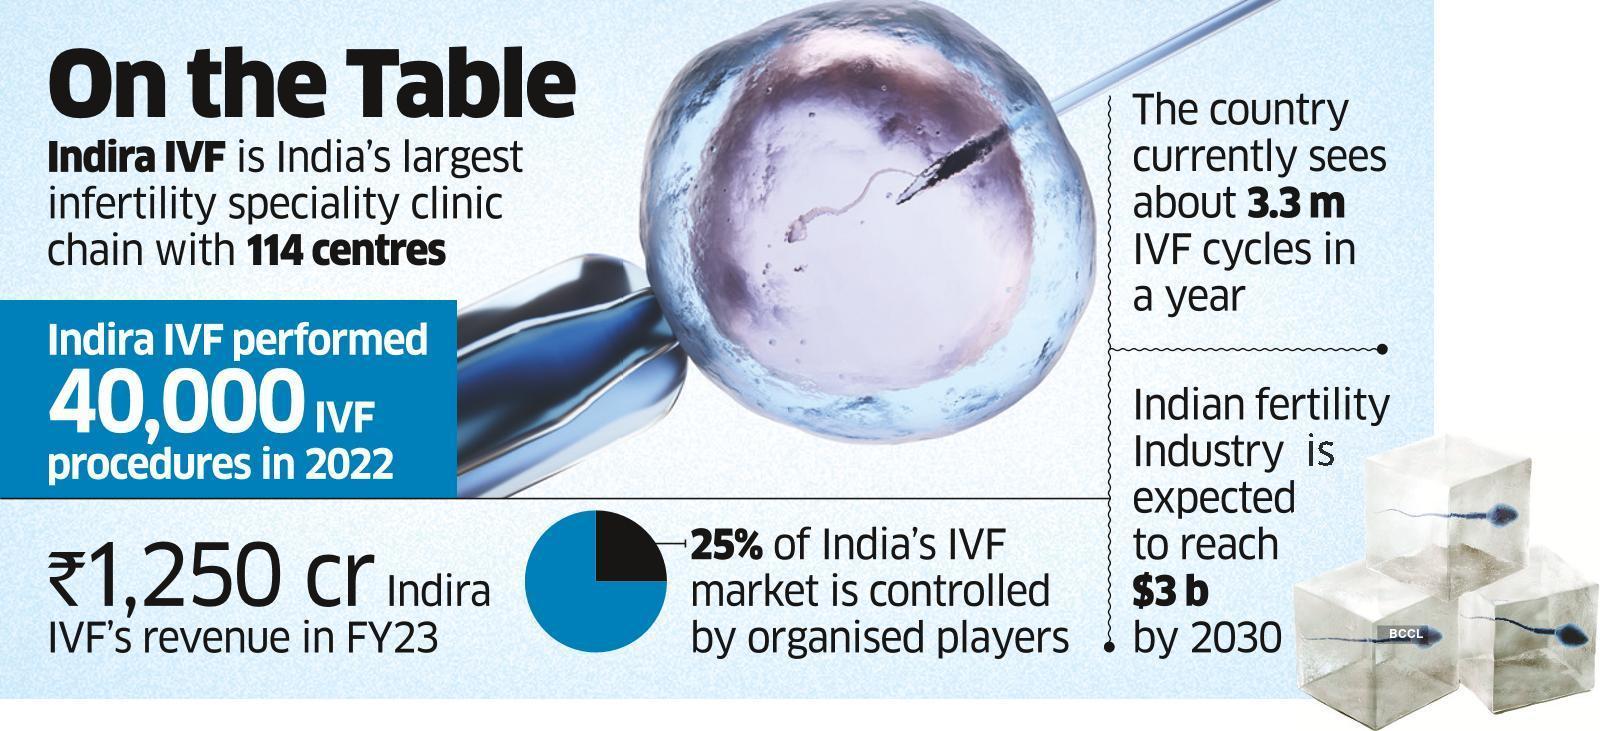 Global Funds Keen to Buy Fertility Chain Indira IVF